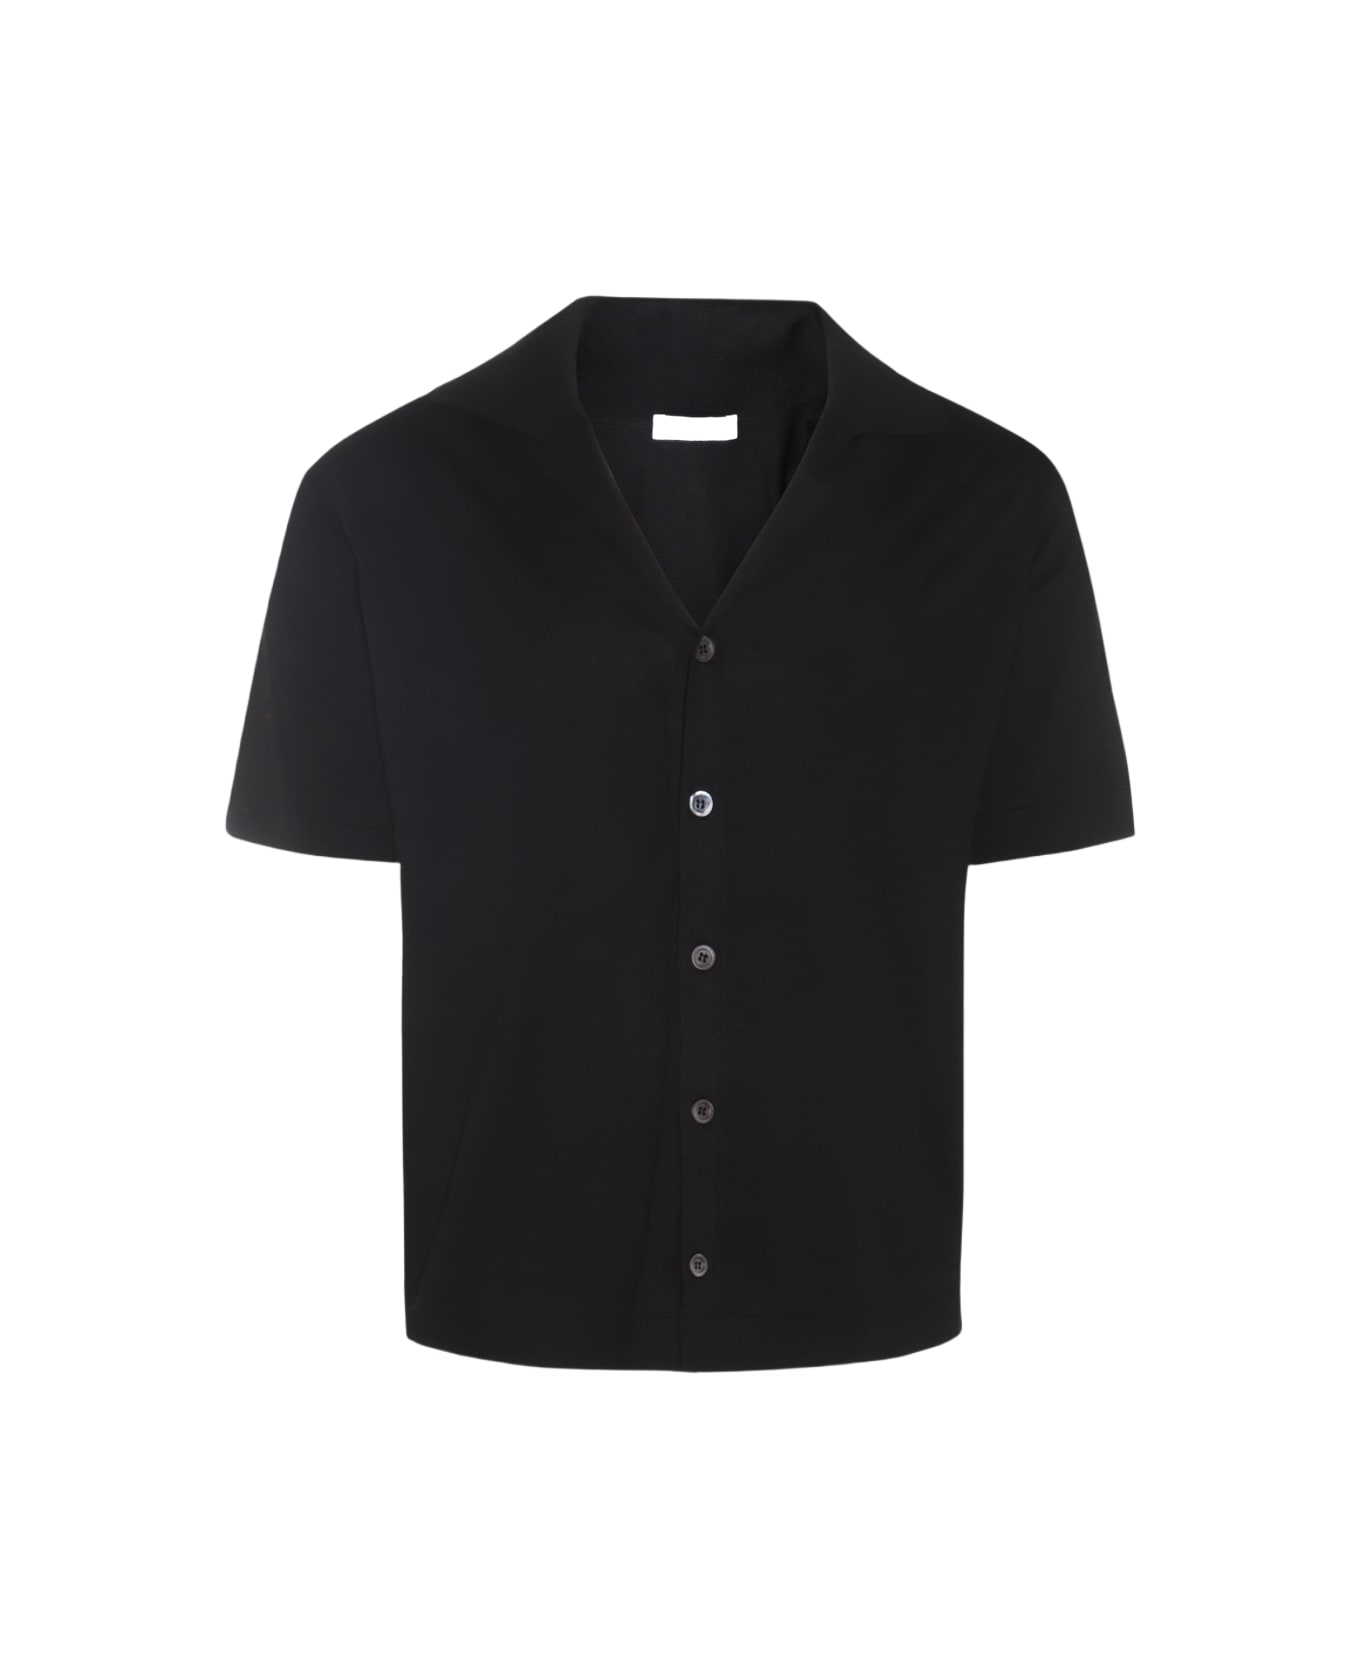 Cruciani Black Cotton Shirt - Black